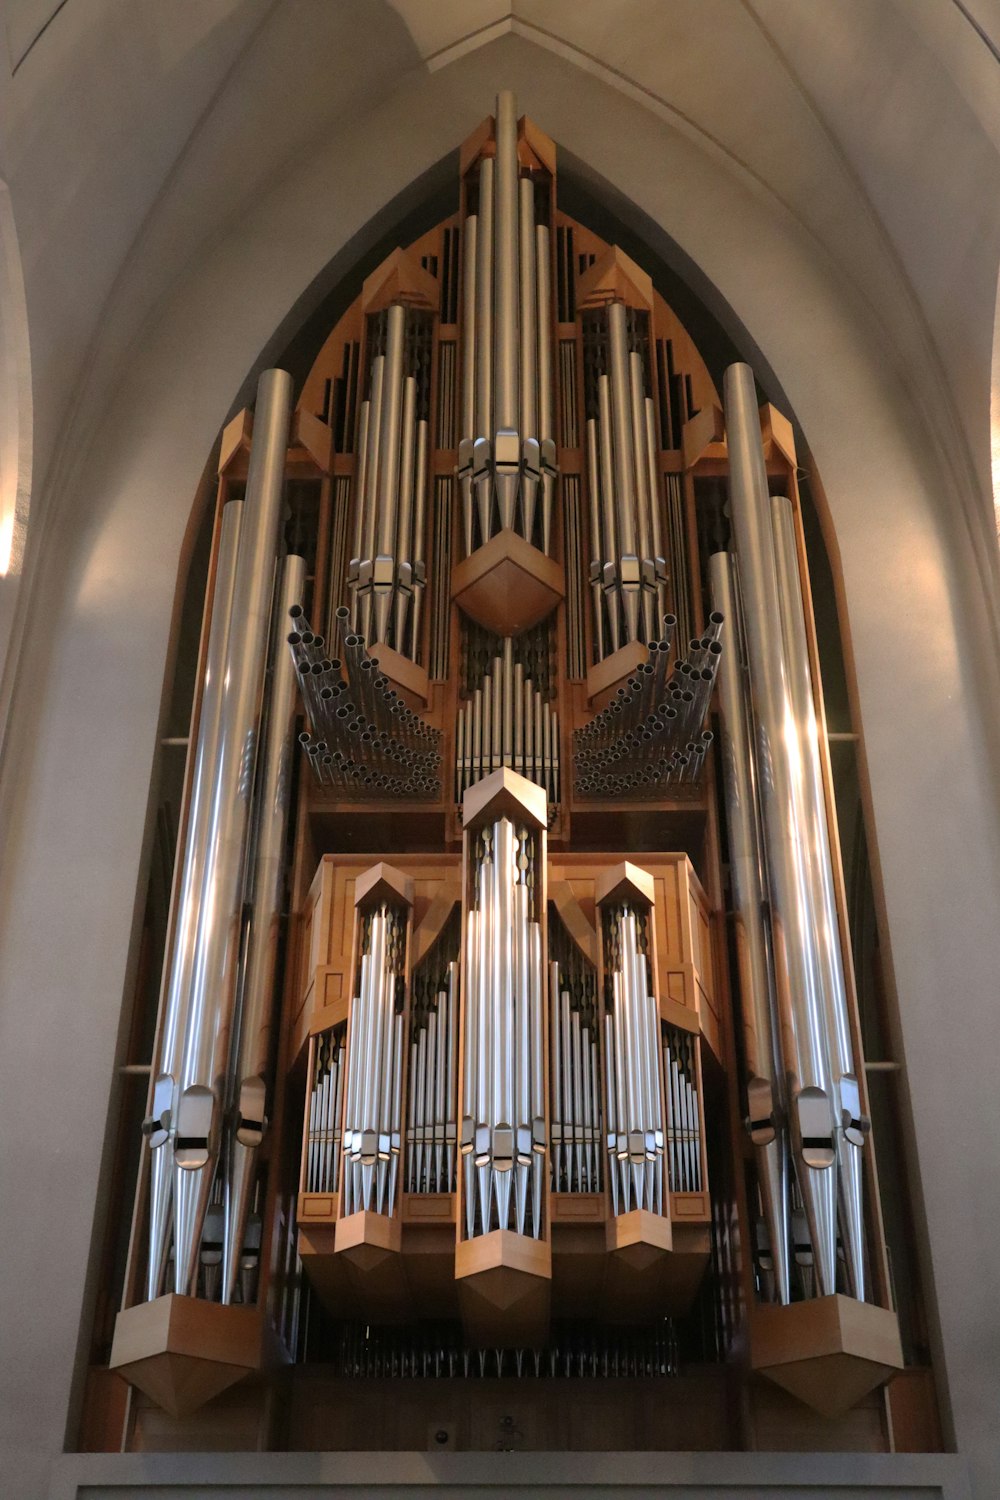 a large pipe organ in a church